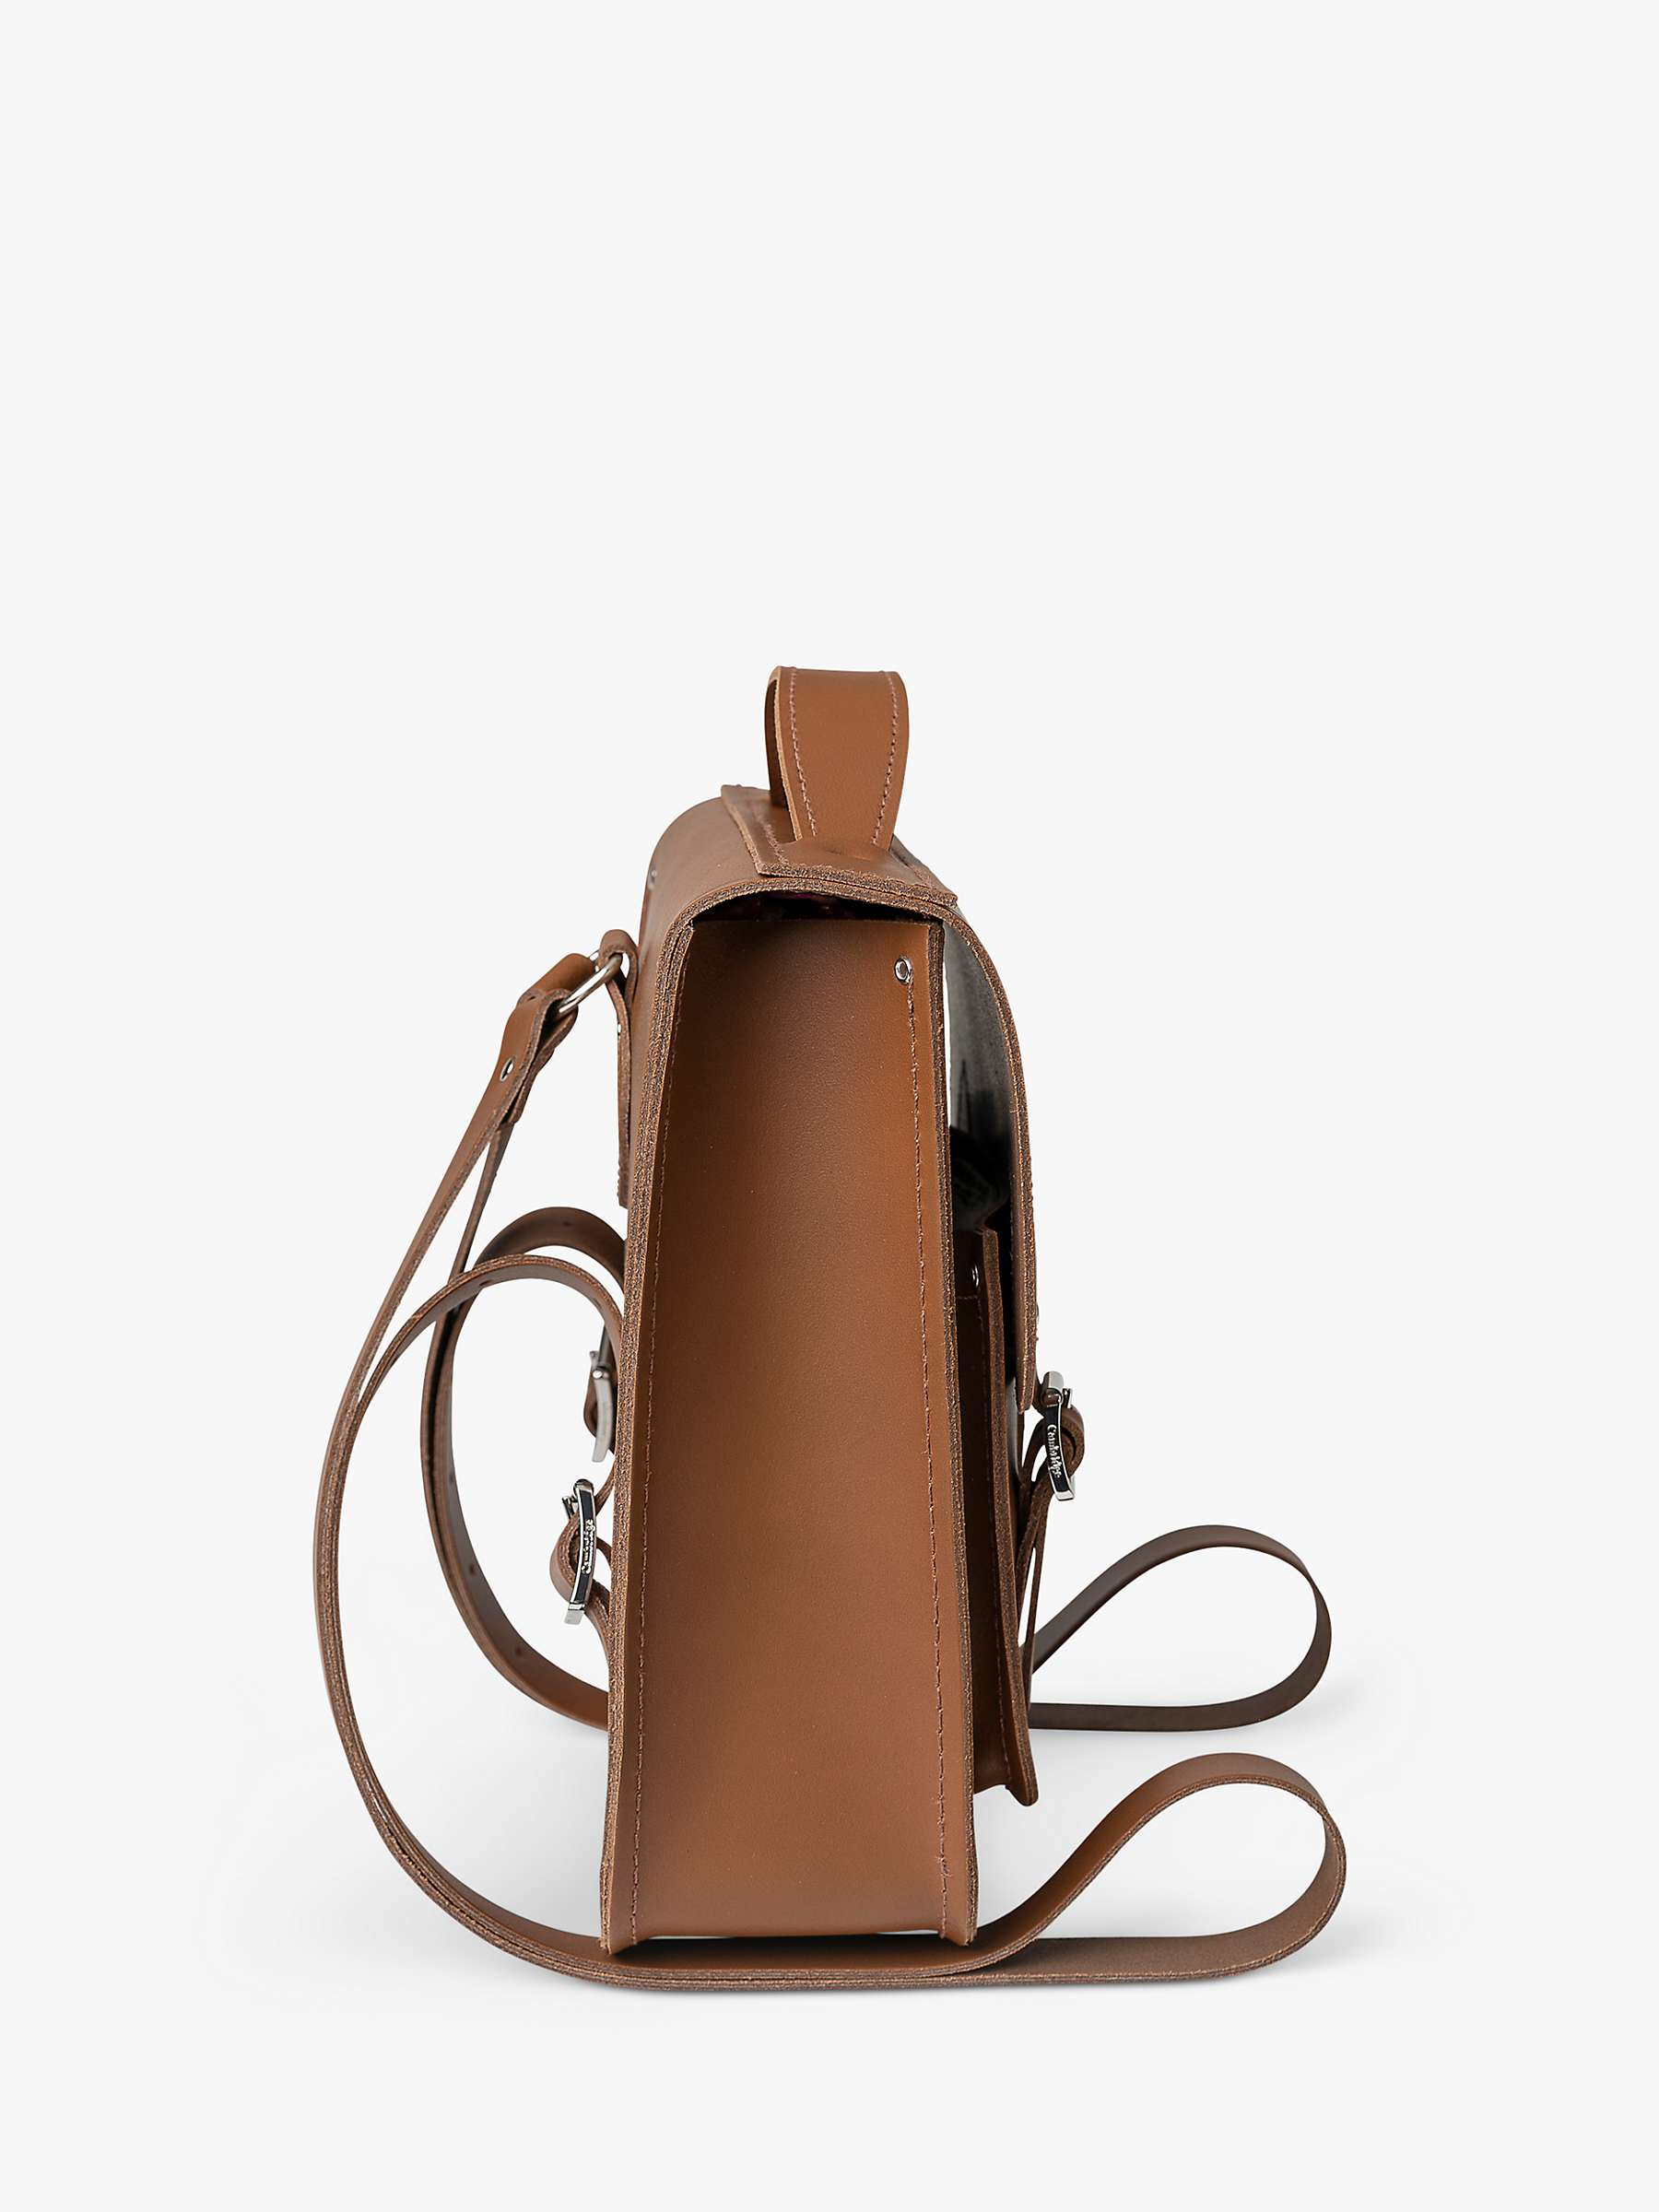 Buy Cambridge Satchel Portrait Small Leather Backpack Online at johnlewis.com